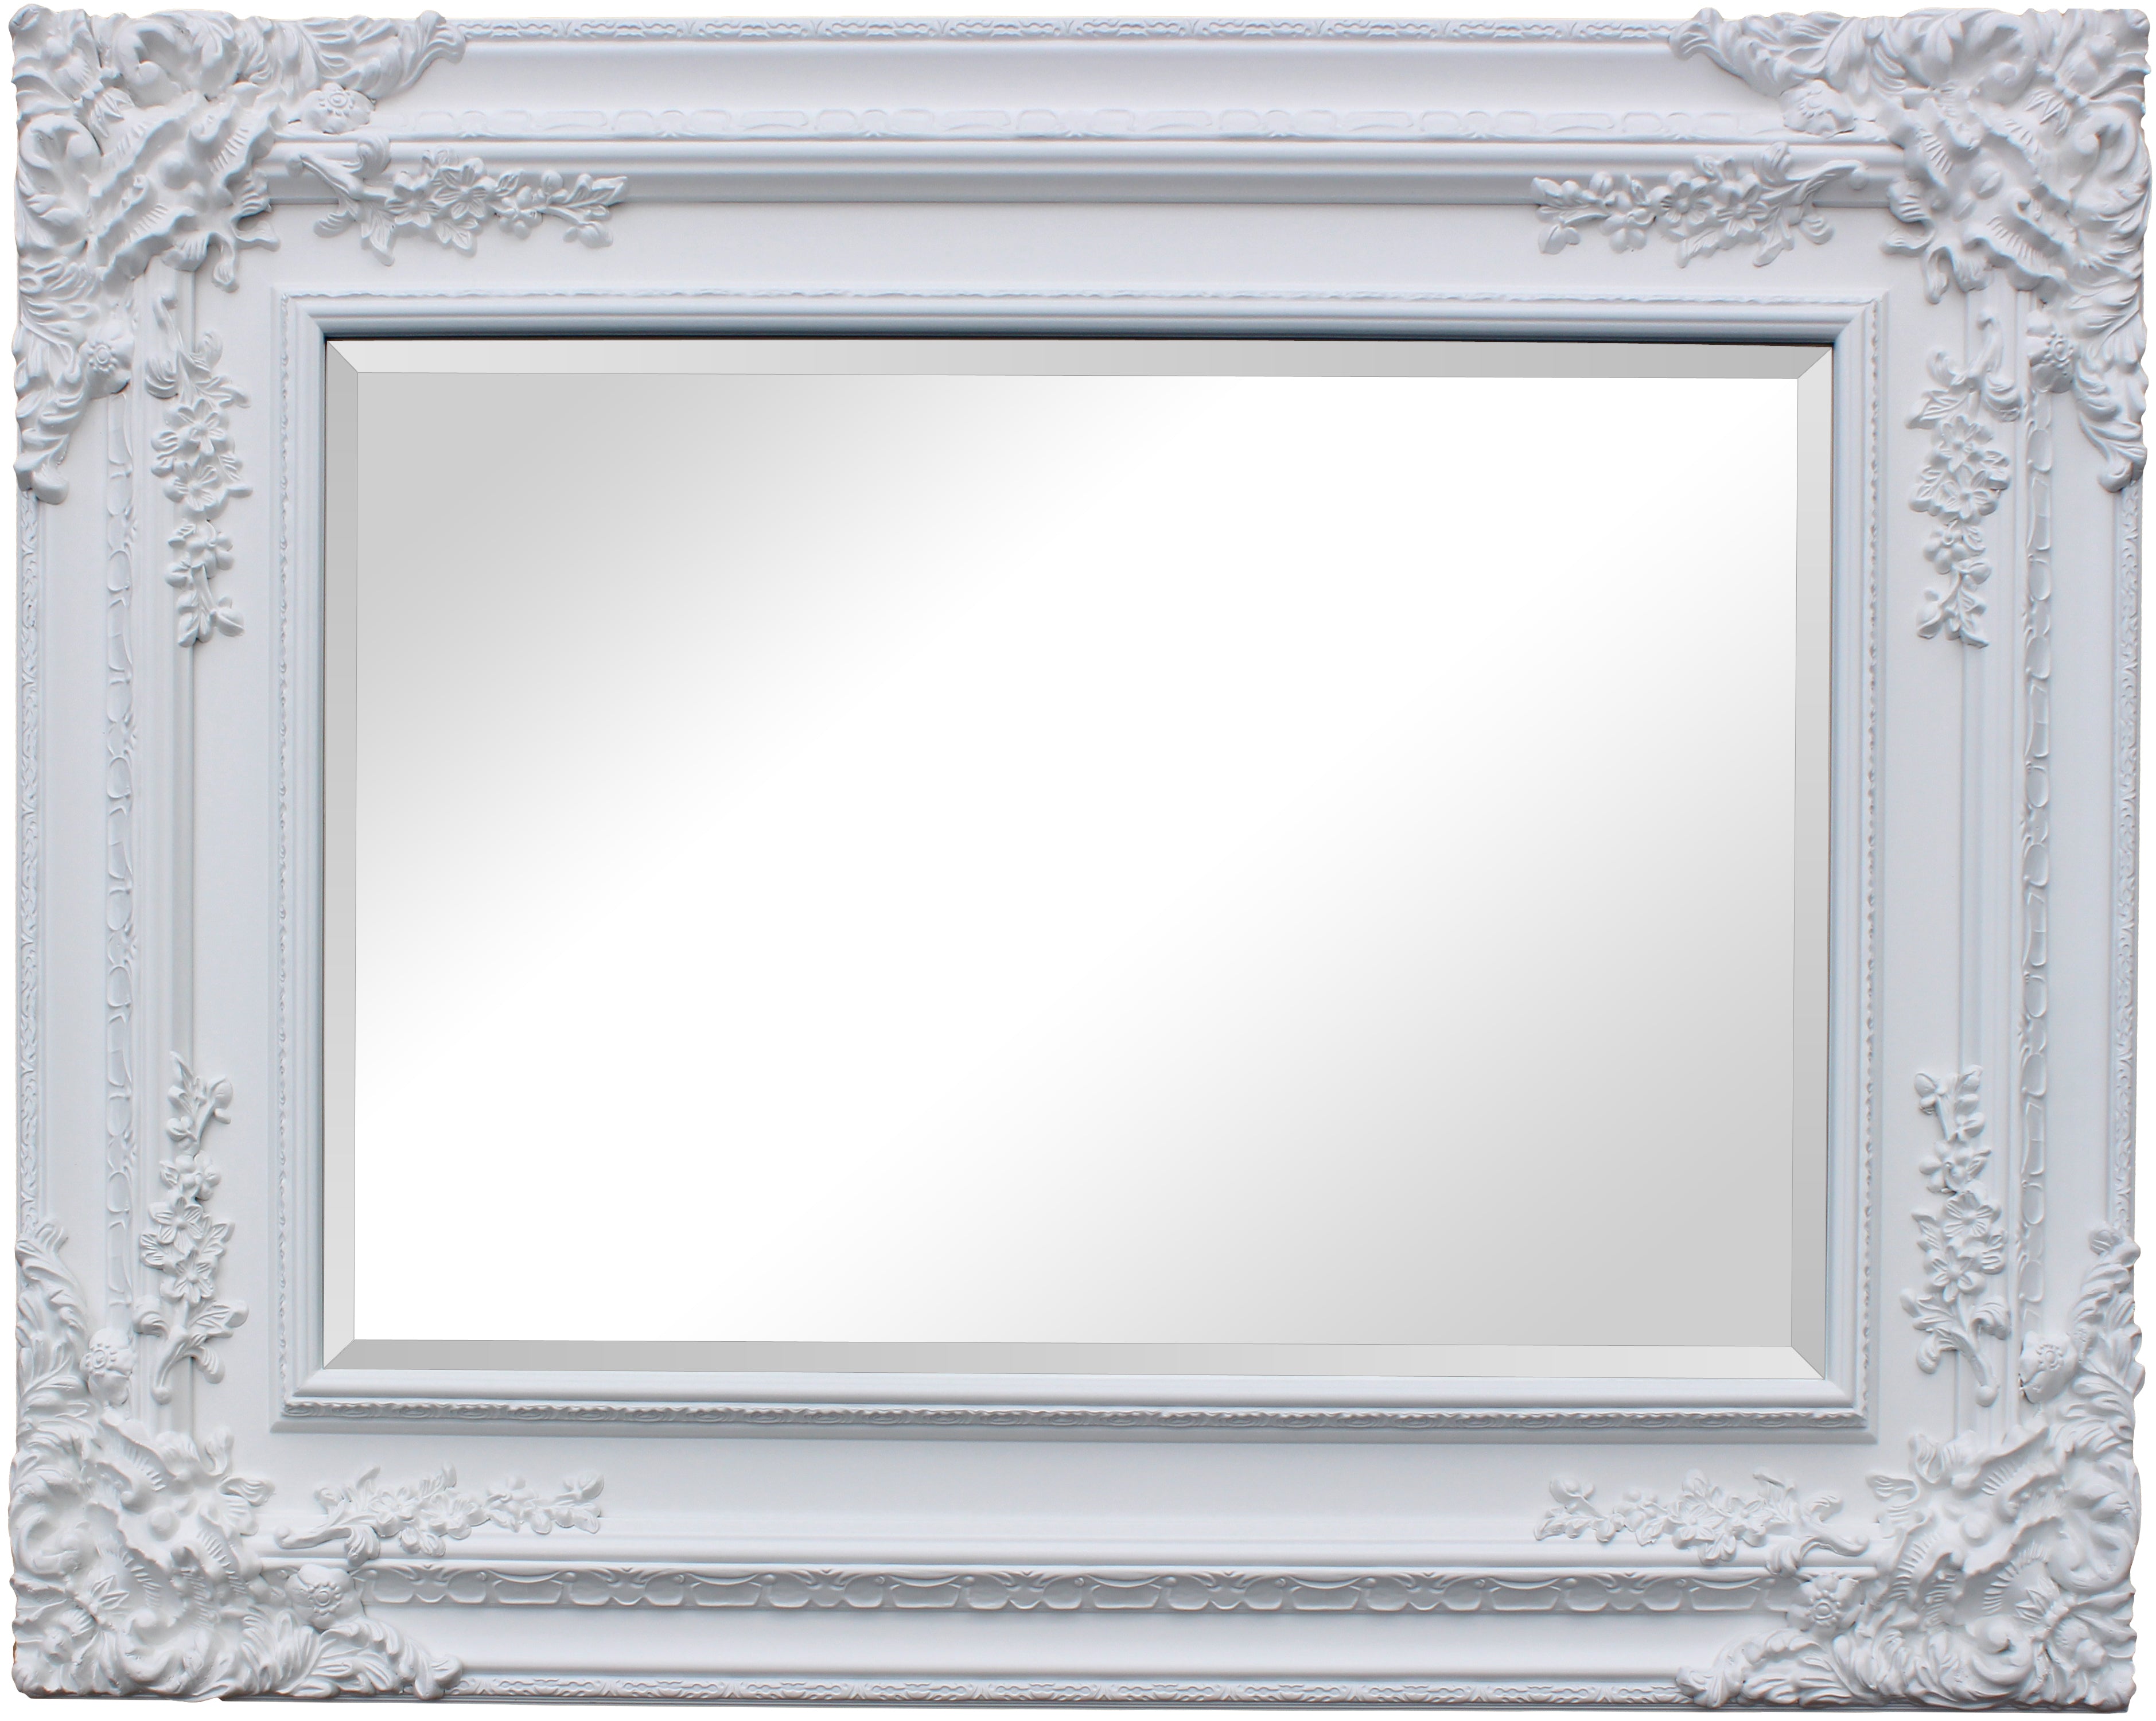 Exquisite European White ornate Mirror